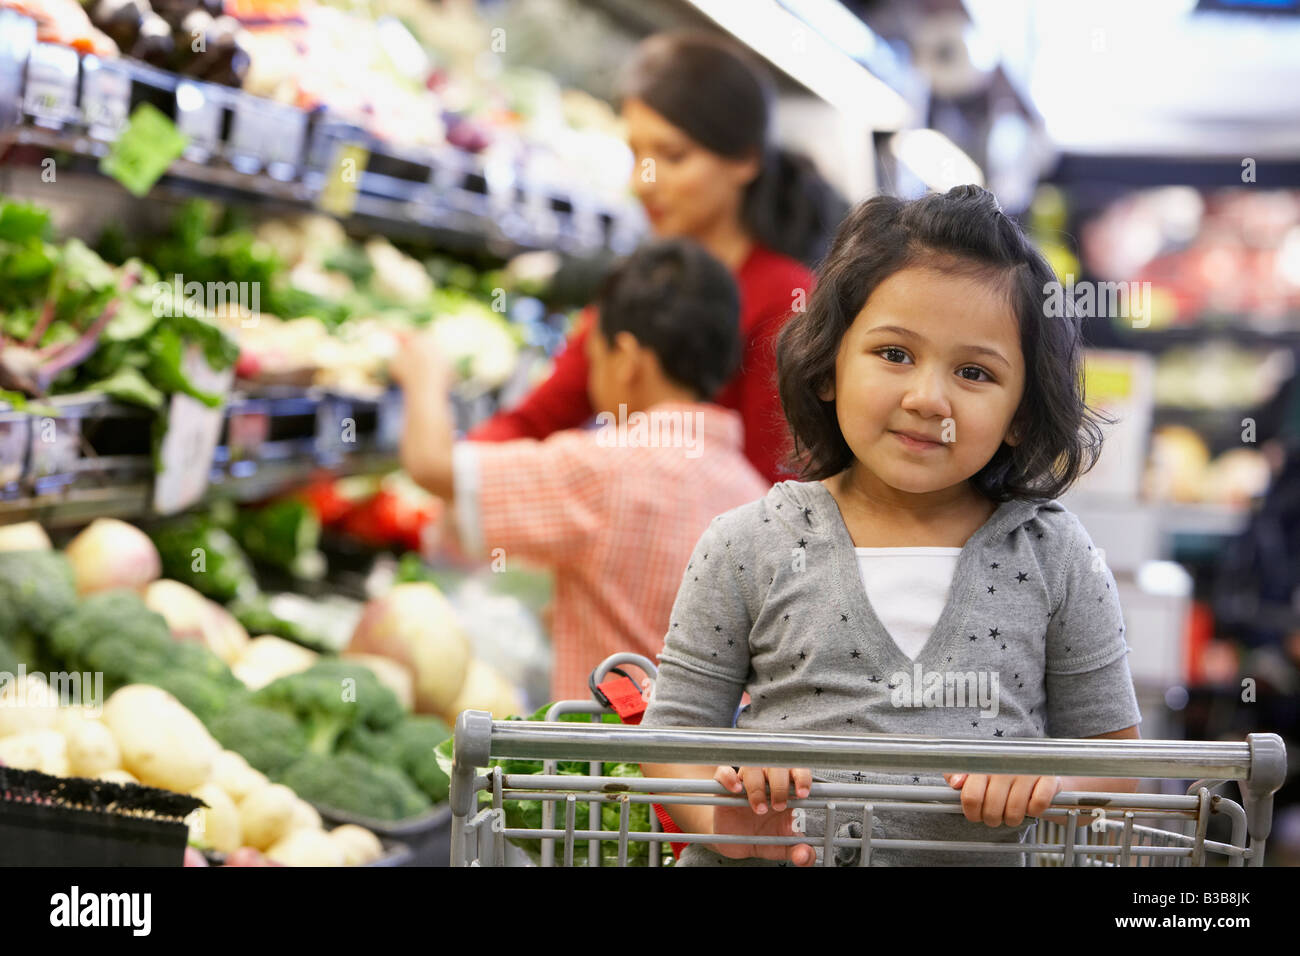 Indian girl sitting in shopping cart Stock Photo